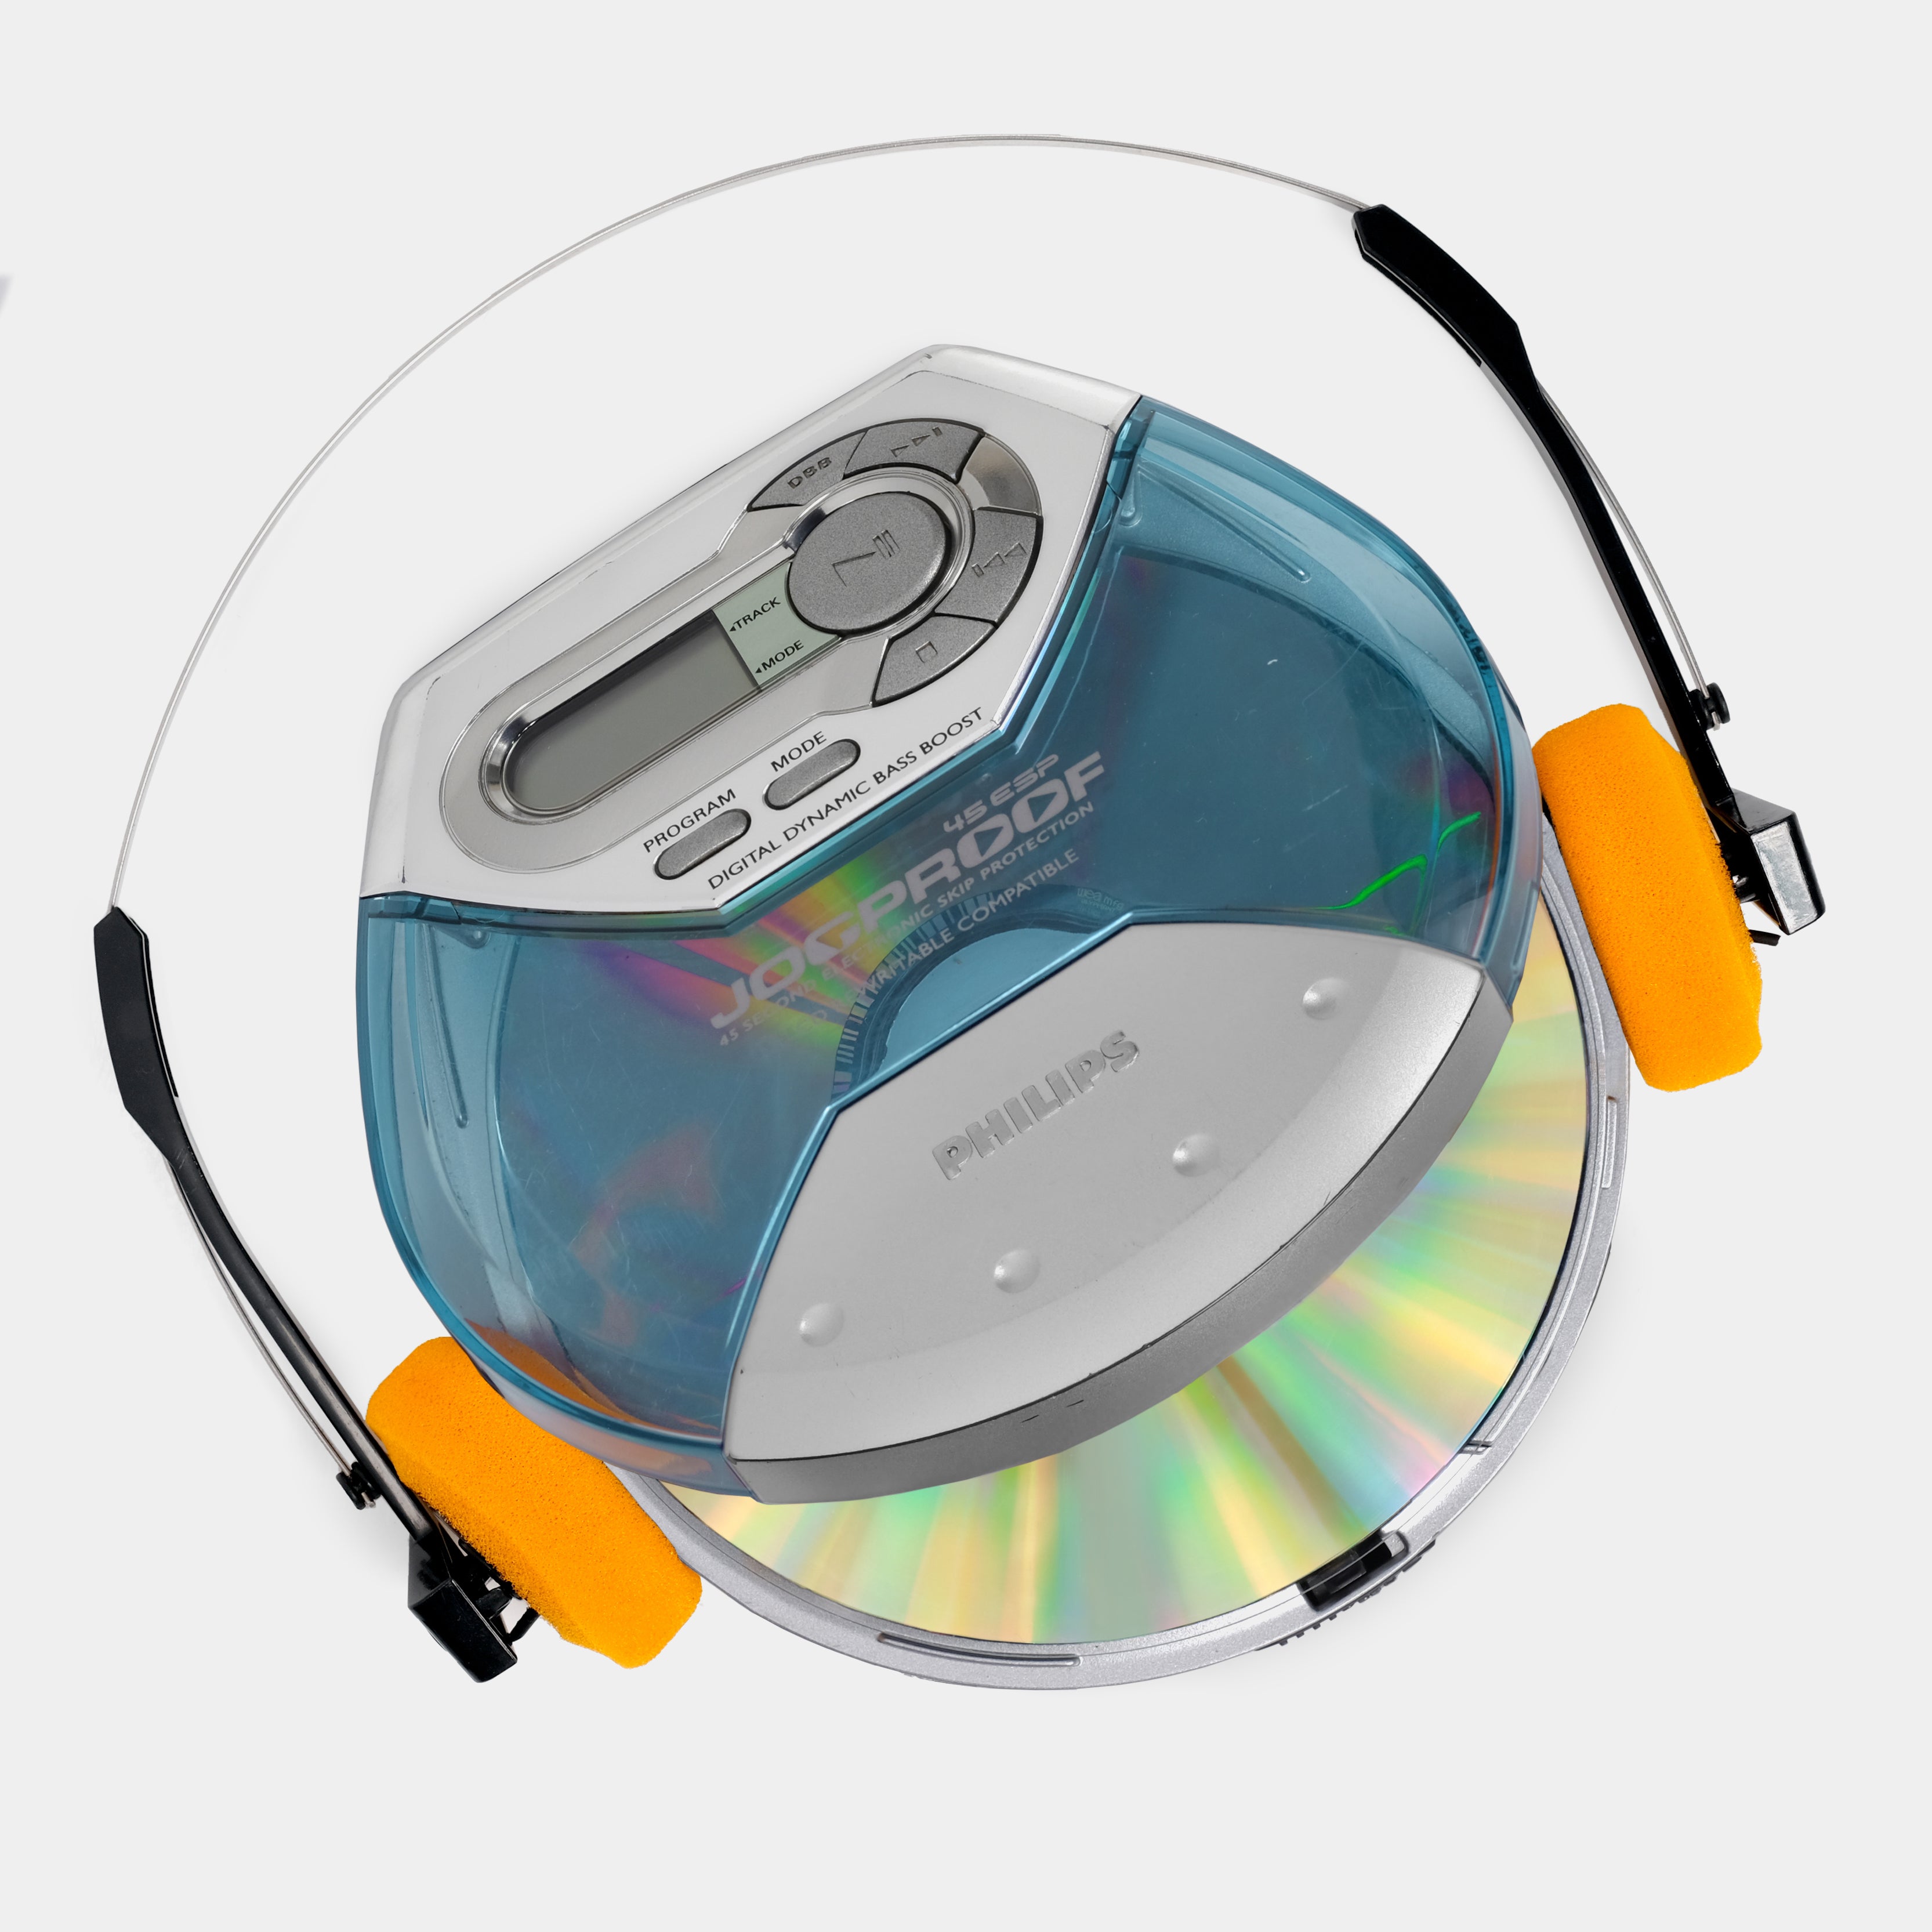 Philips Jogproof AX5111/17 Portable CD Player